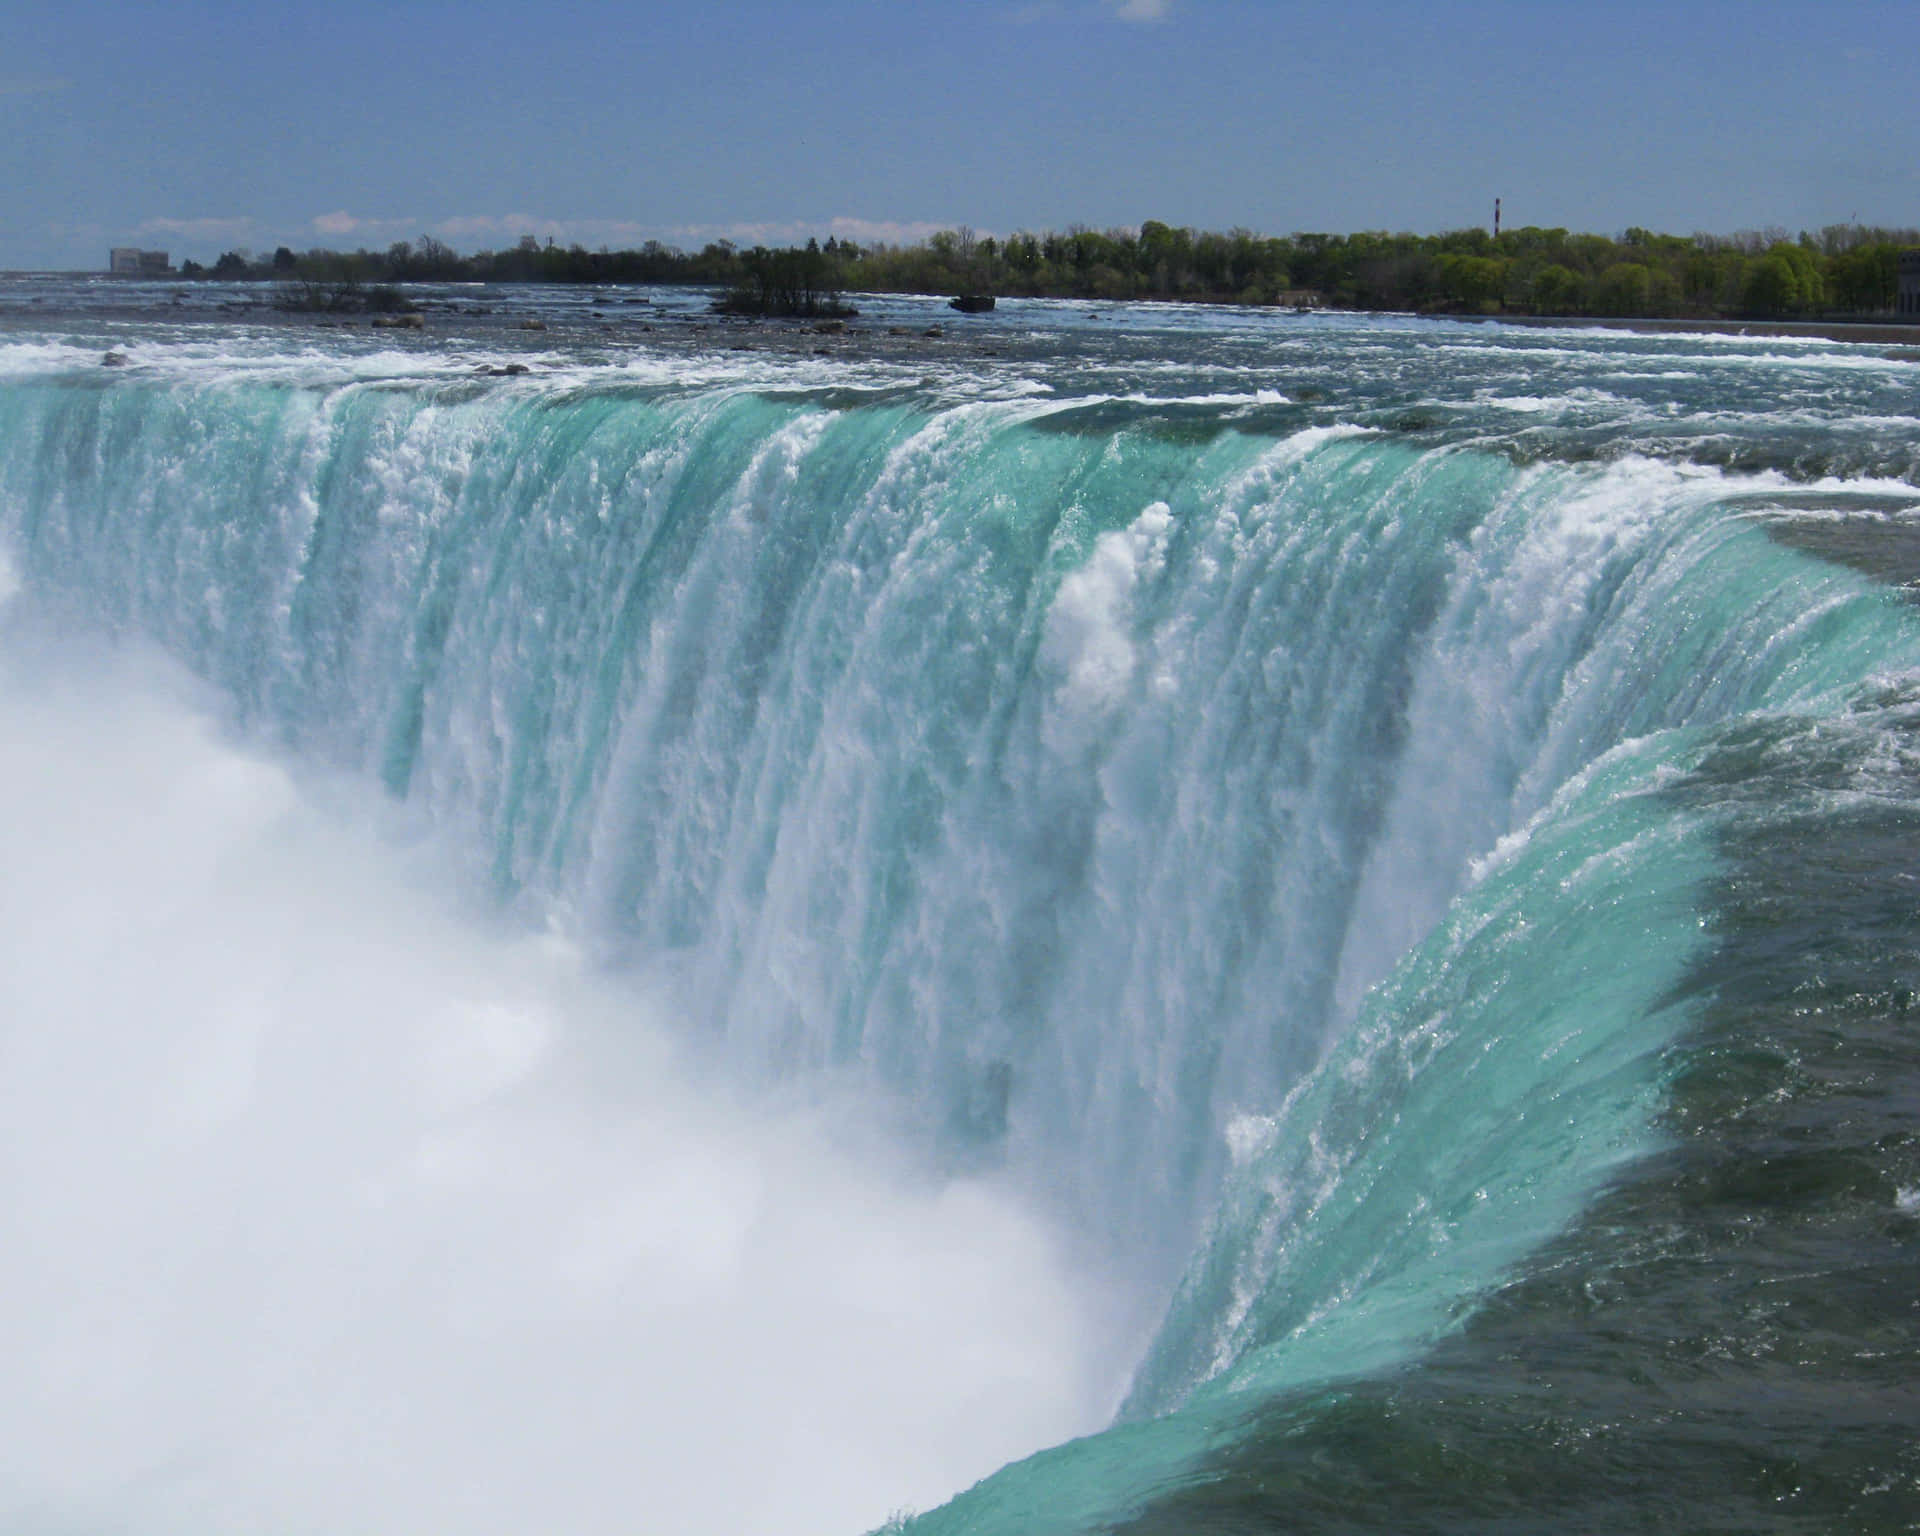 Enjoy the beauty of Niagara Falls!